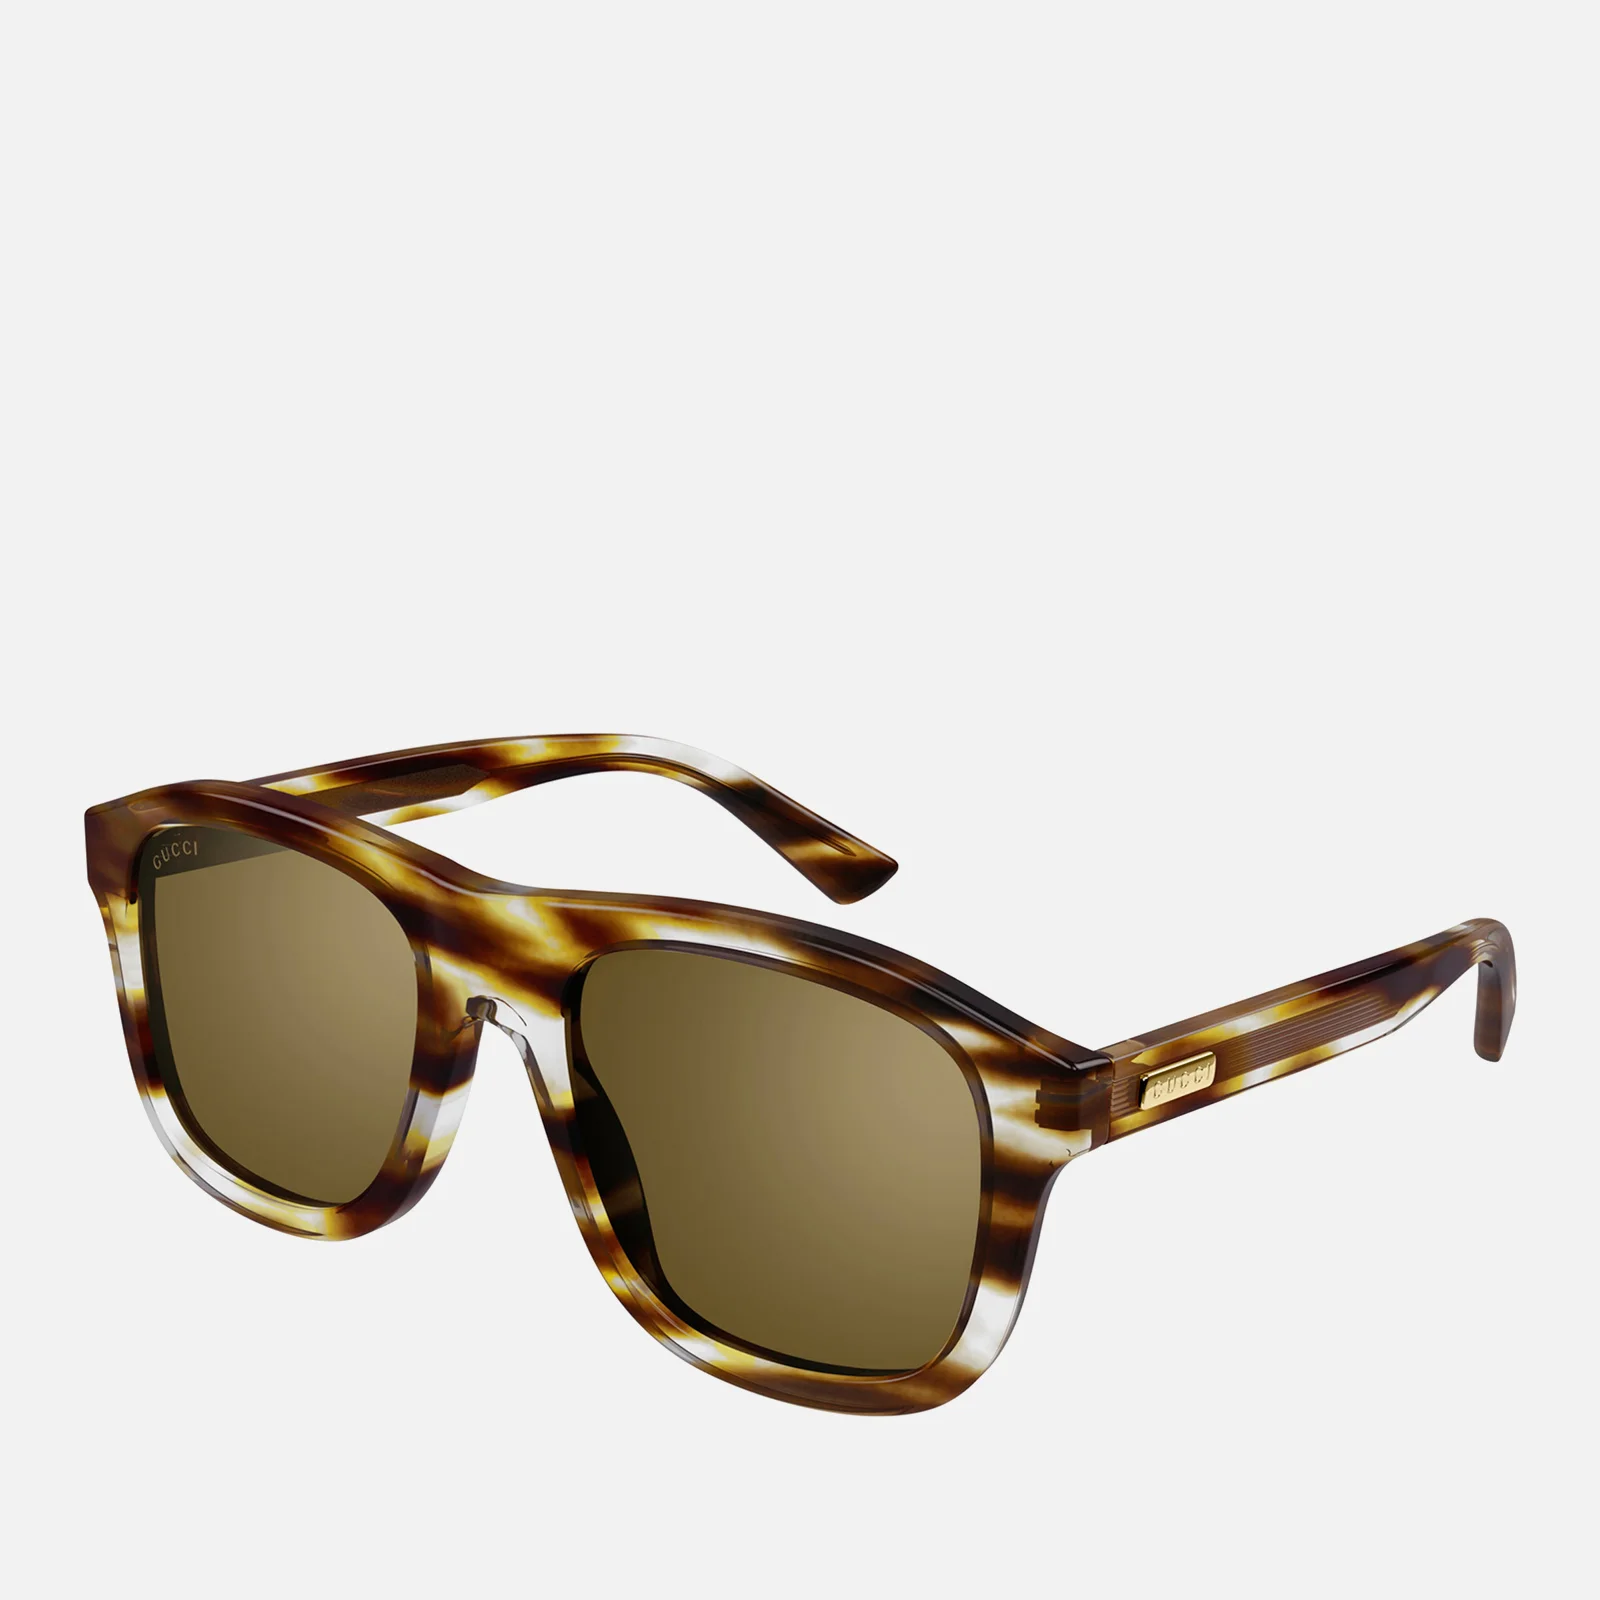 Gucci Acetate Aviator-Style Sunglasses Image 1